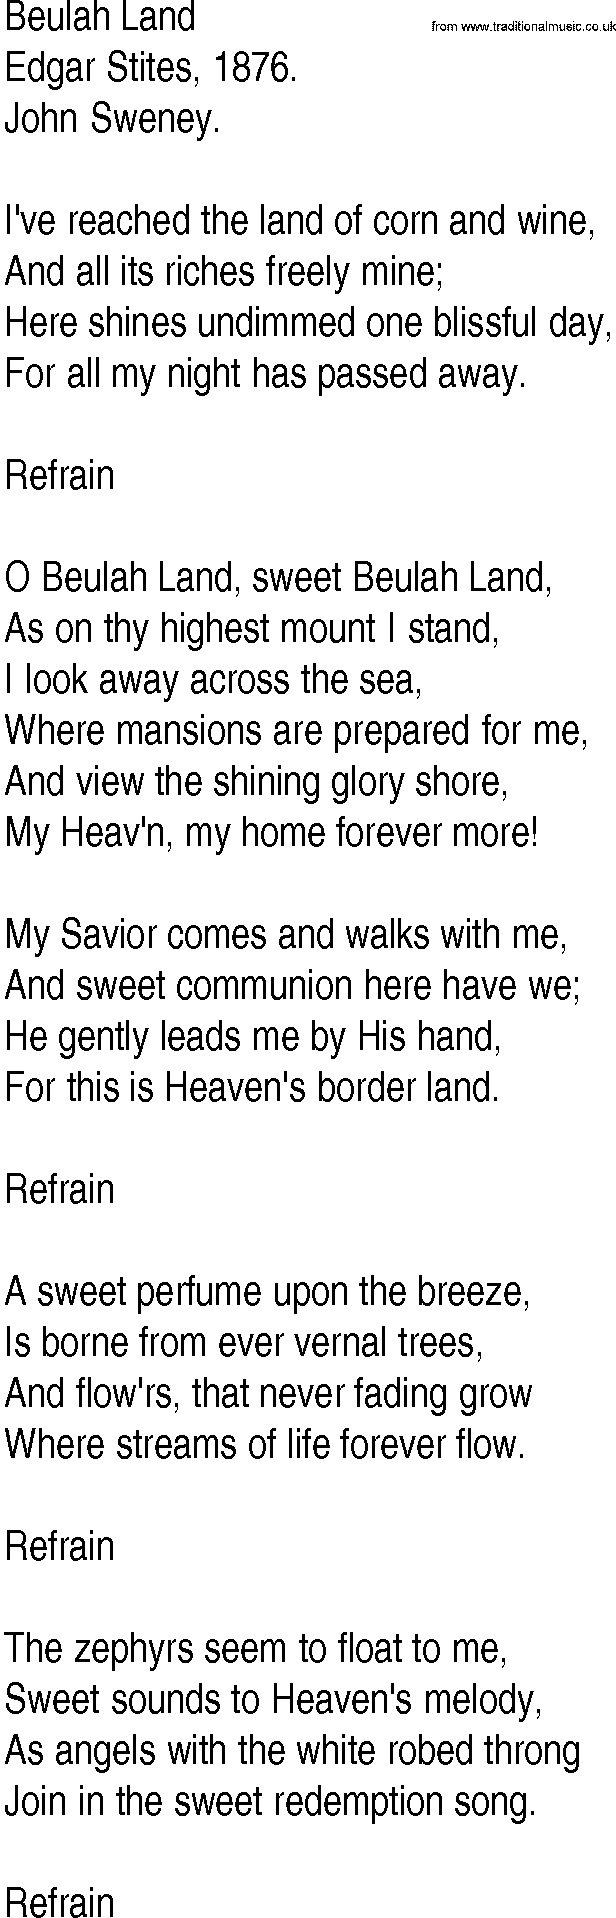 Hymn and Gospel Song: Beulah Land by Edgar Stites lyrics